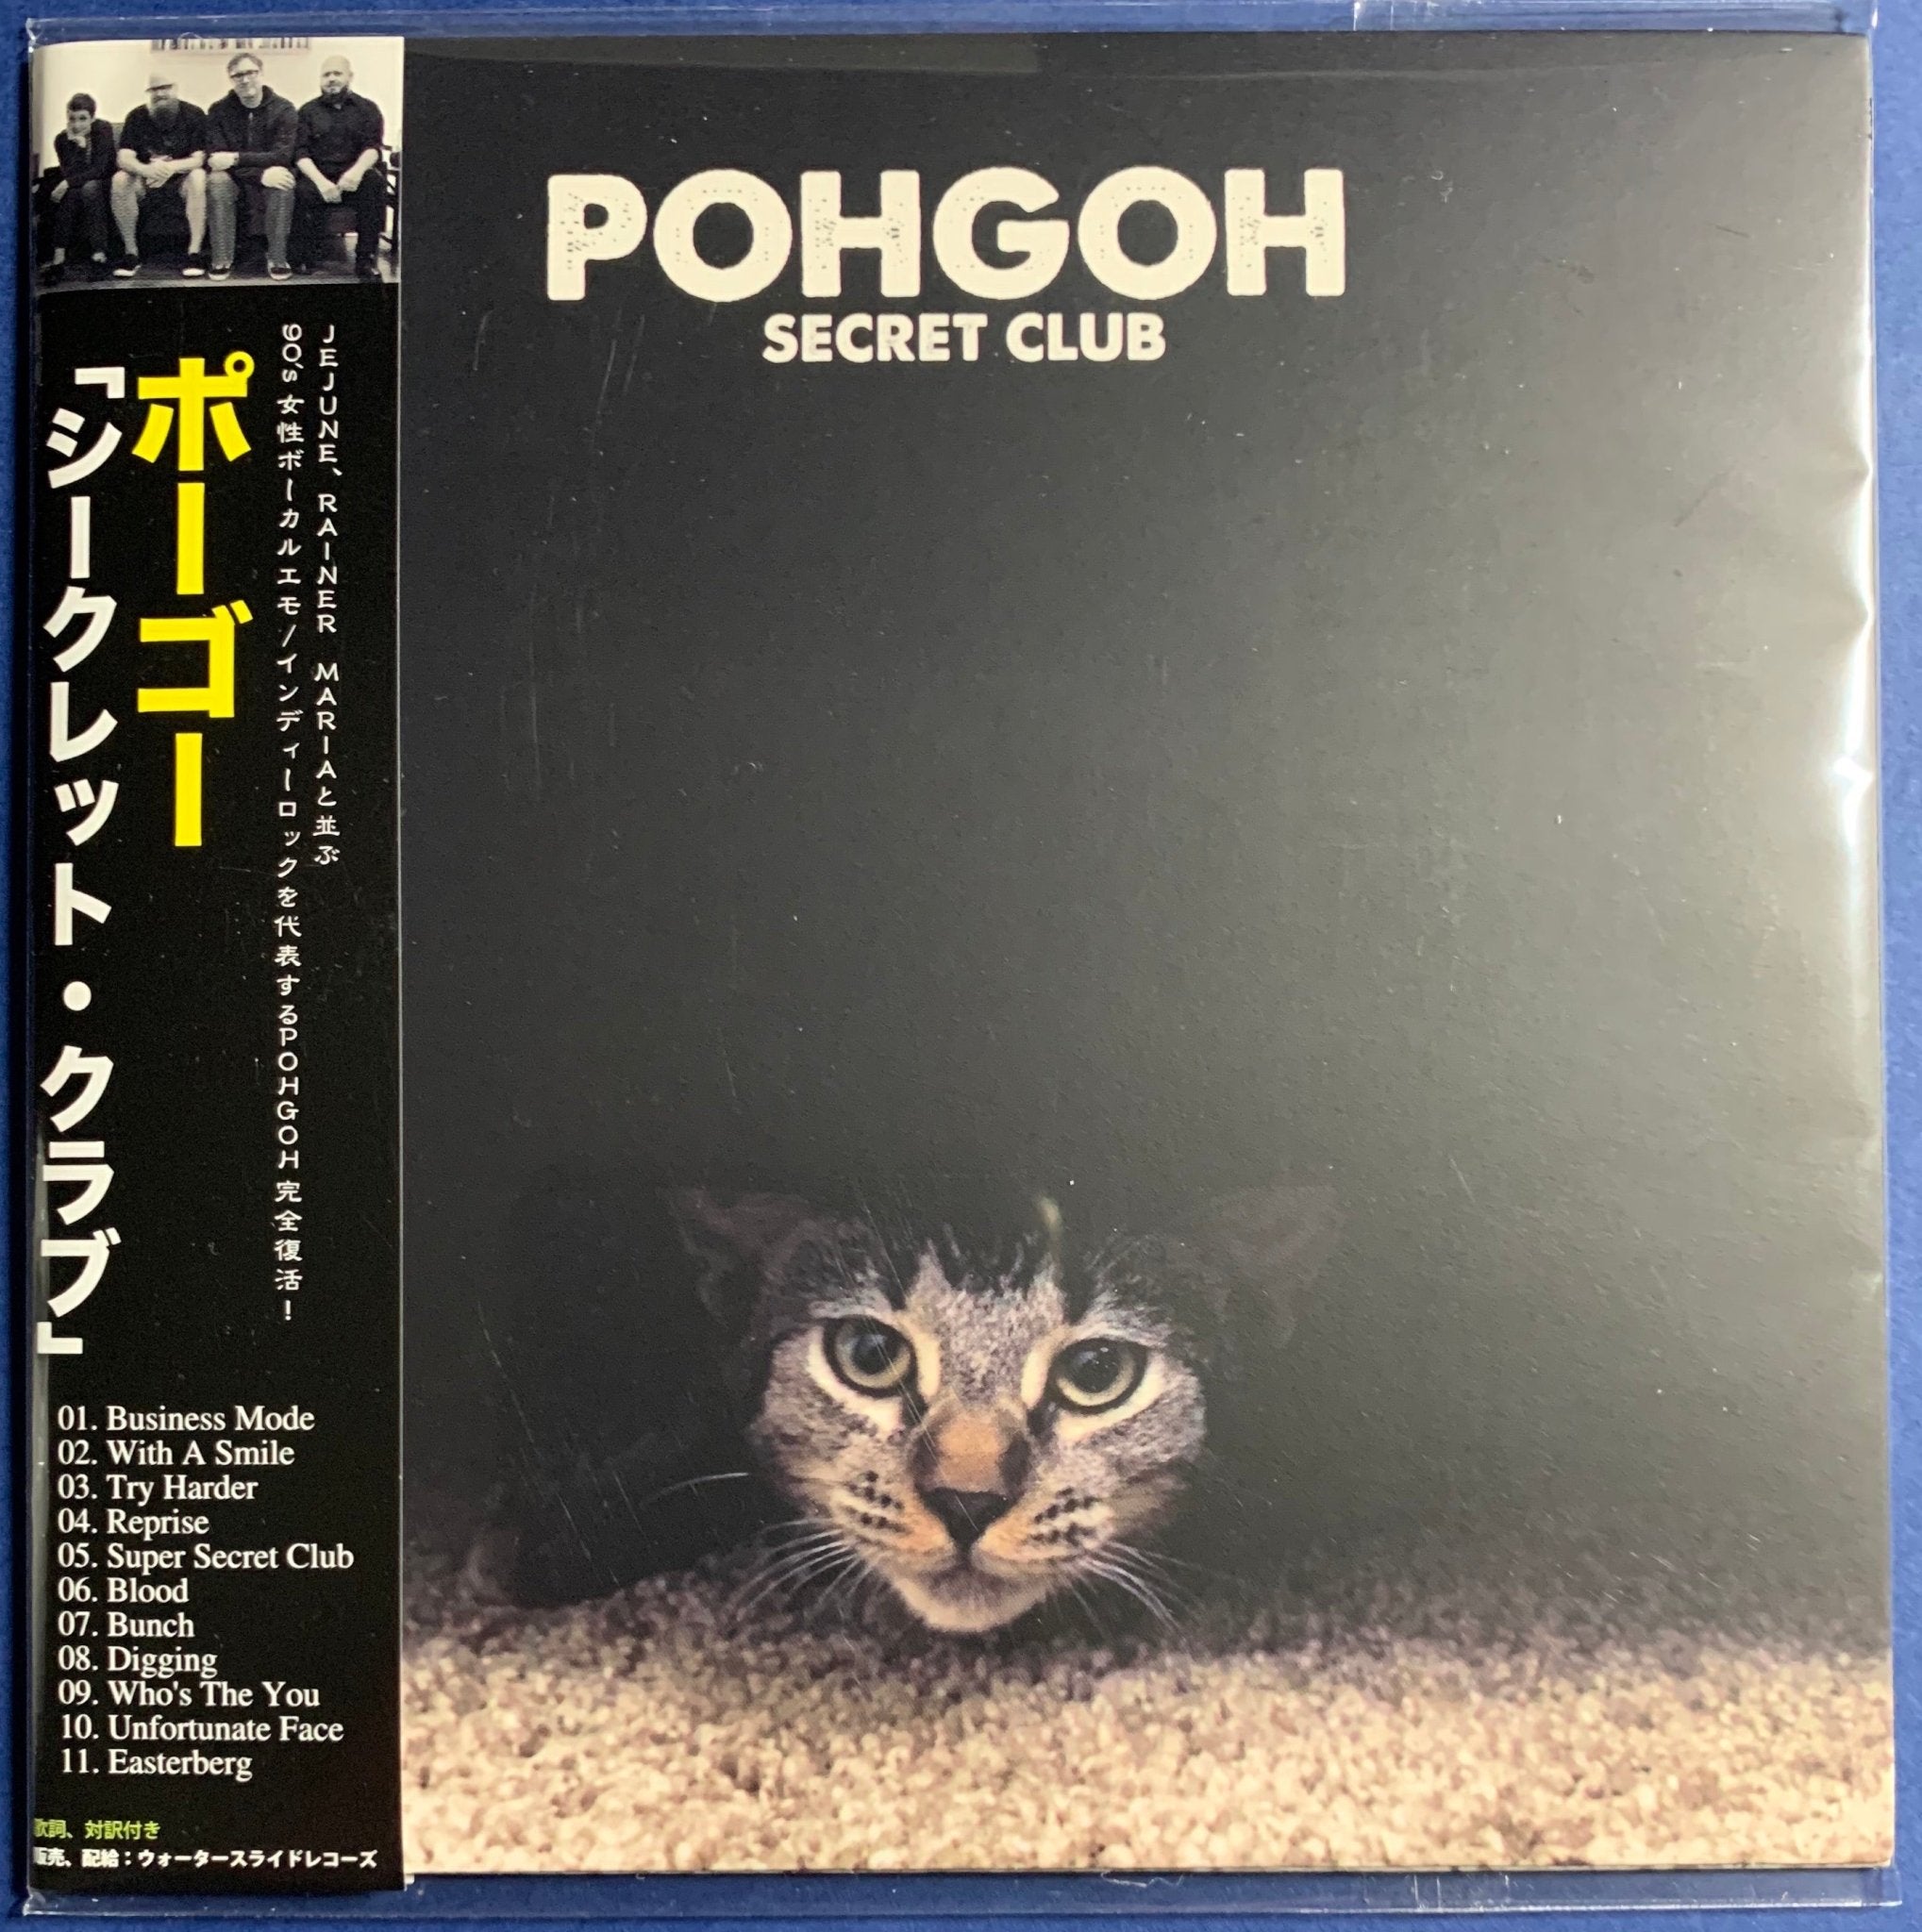 Pohgoh: Secret Club: CD (Japanese Import) - Steadfast Records